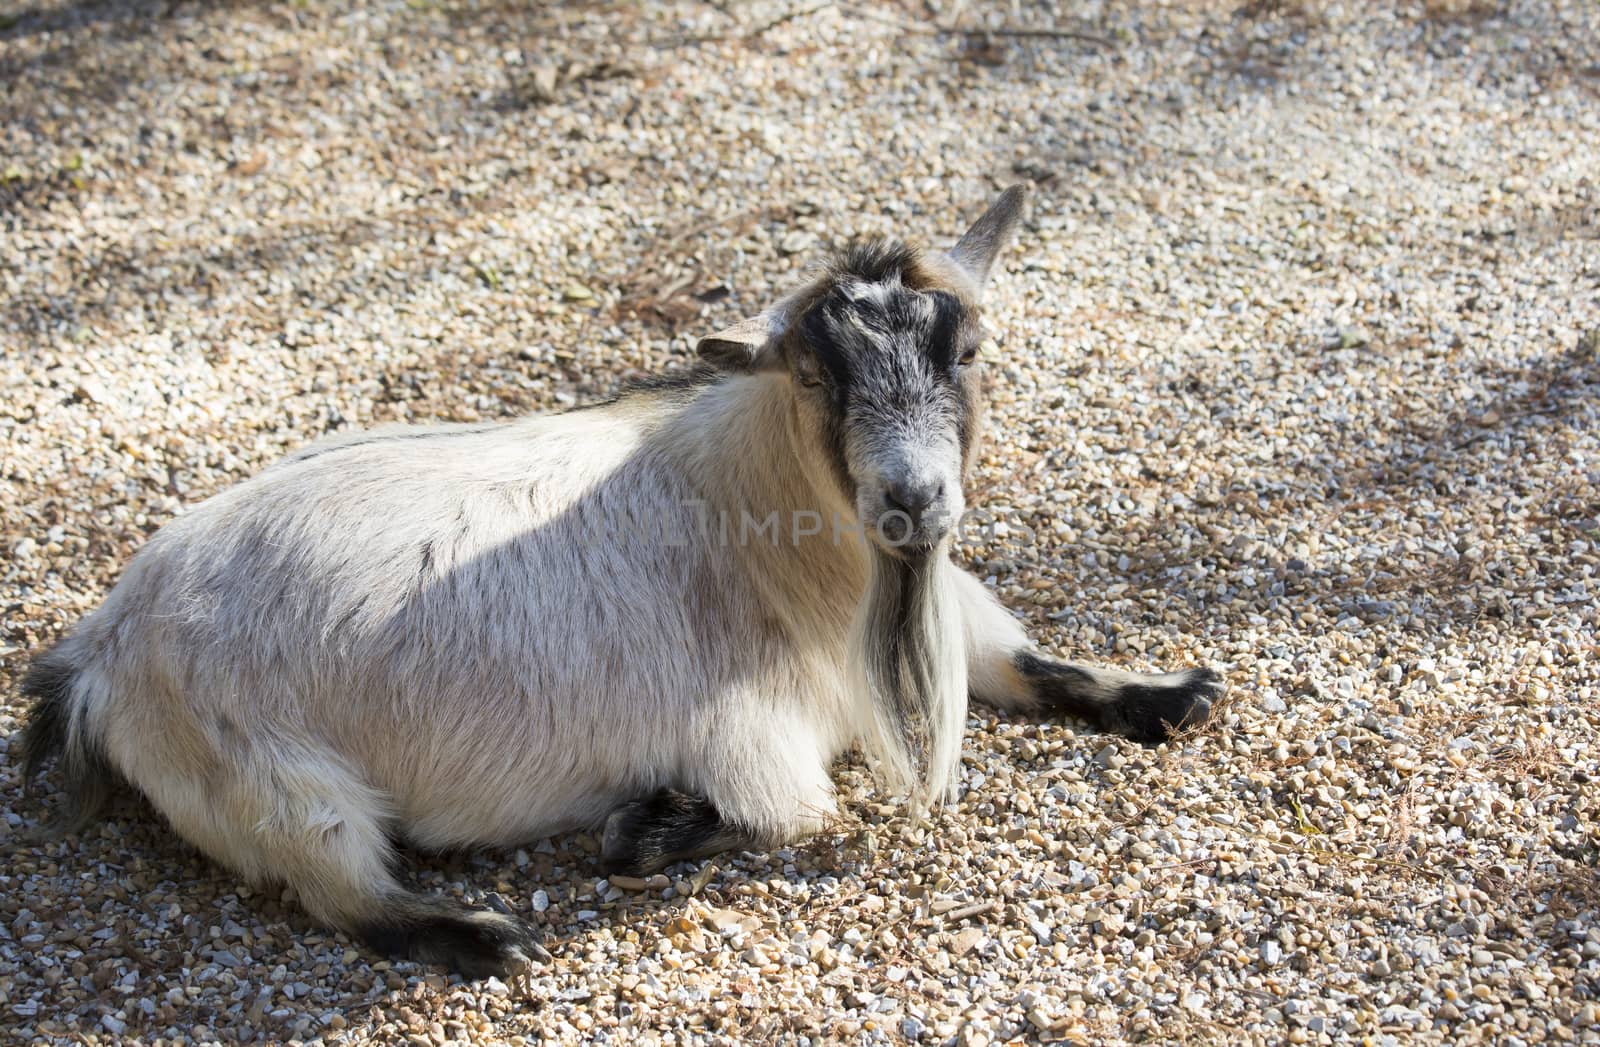 Goat by tornado98